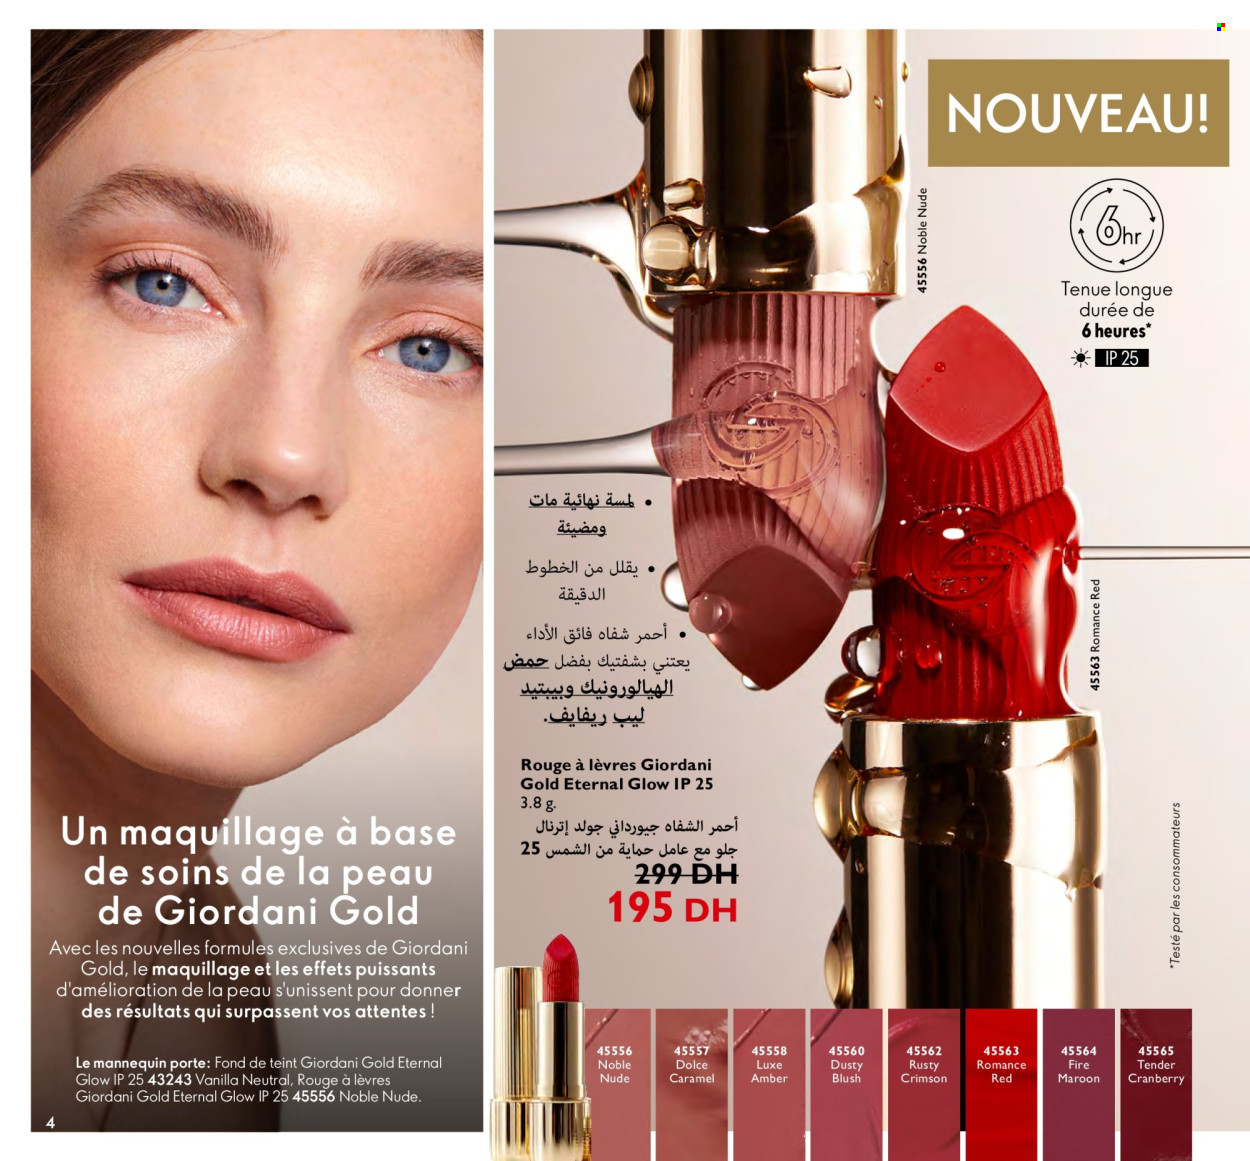 <magasin> - <du DD/MM/YYYY au DD/MM/YYYY> - Produits soldés - ,<products from flyers>. Page 4. 